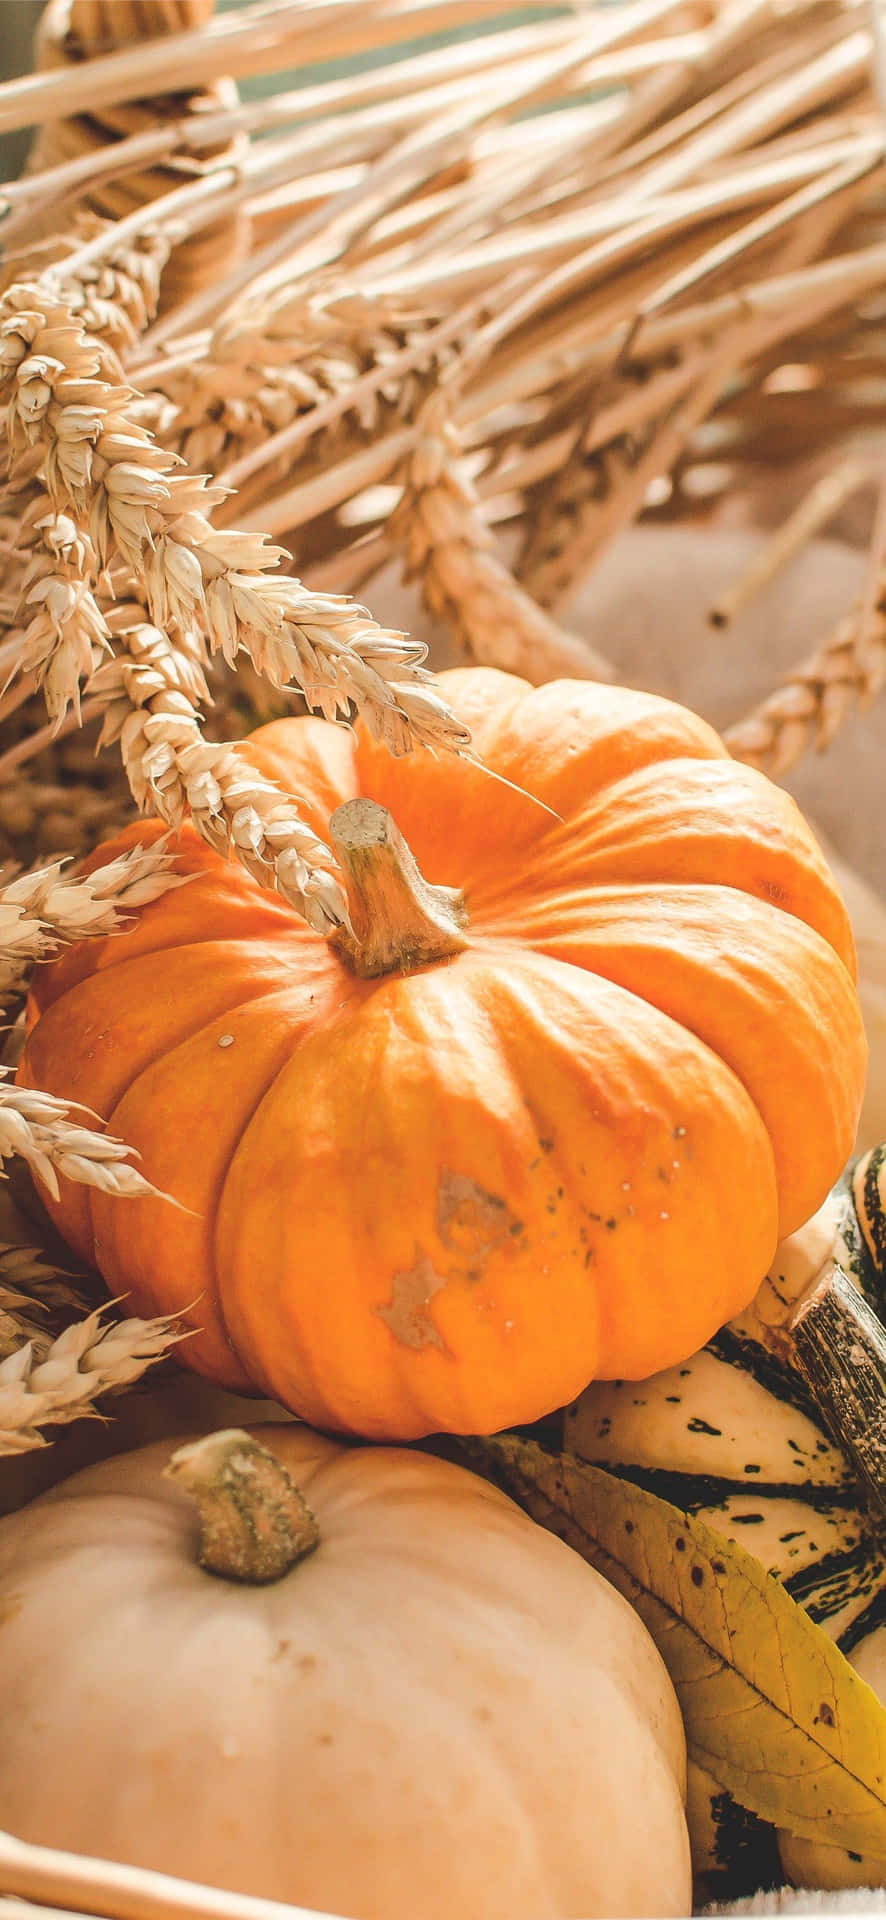 Autumn Harvest Pumpkinand Wheat.jpg Wallpaper